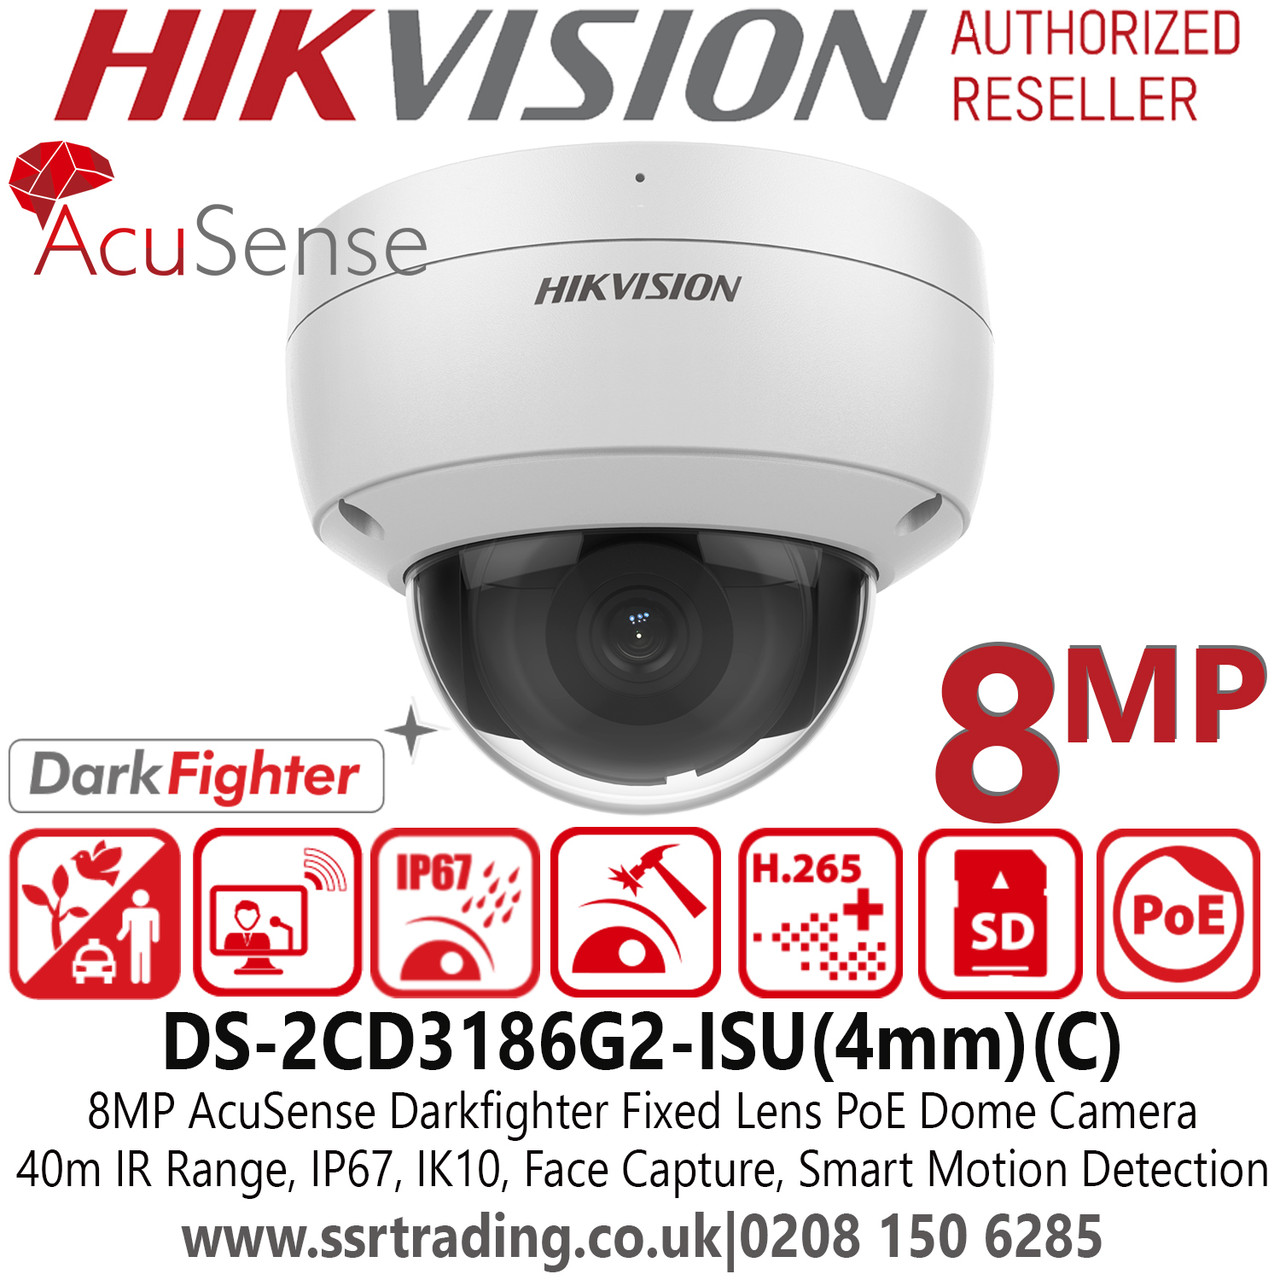 Hikvision DS-2CD3186G2-ISU(4mm) 8MP AcuSense DarkFighter IP PoE Dome ...